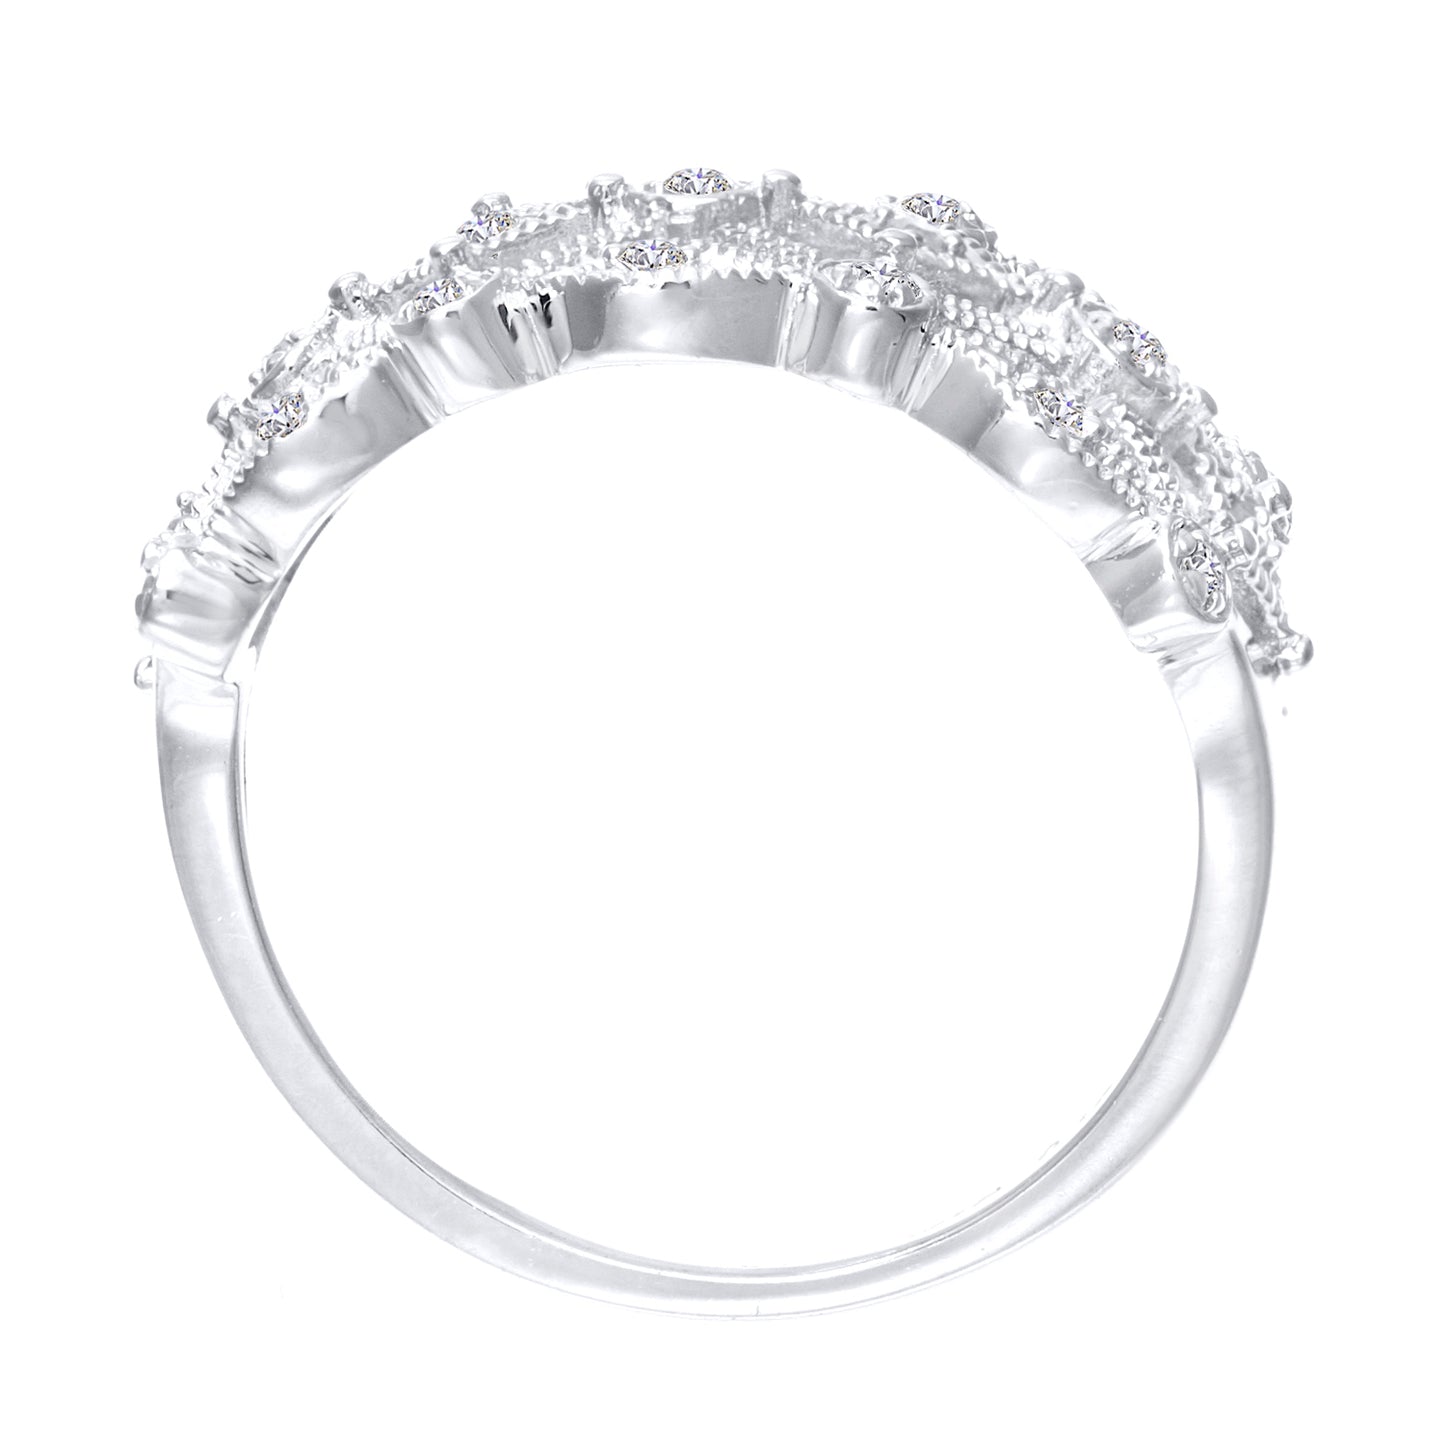 9ct White Gold  10pts Diamond Art Deco Floral Filigree Dress Ring - PR0AXL4557W